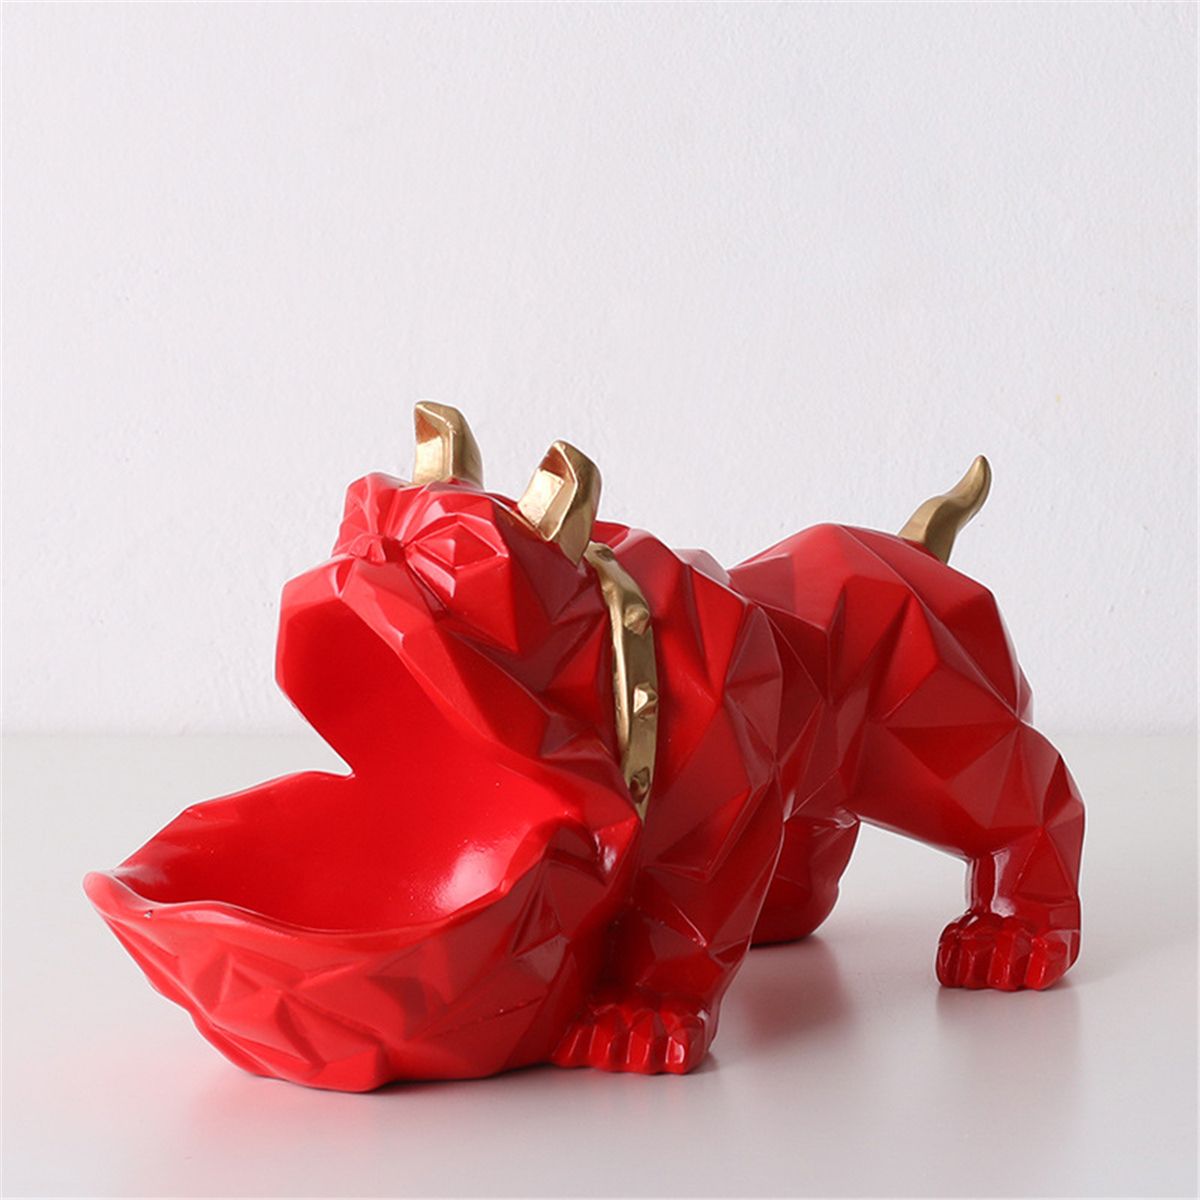 Bulldog-Animal-Sculpture-Puppy-Dog-Statue-Figure-Ornament-Gift-Decorations-1464229